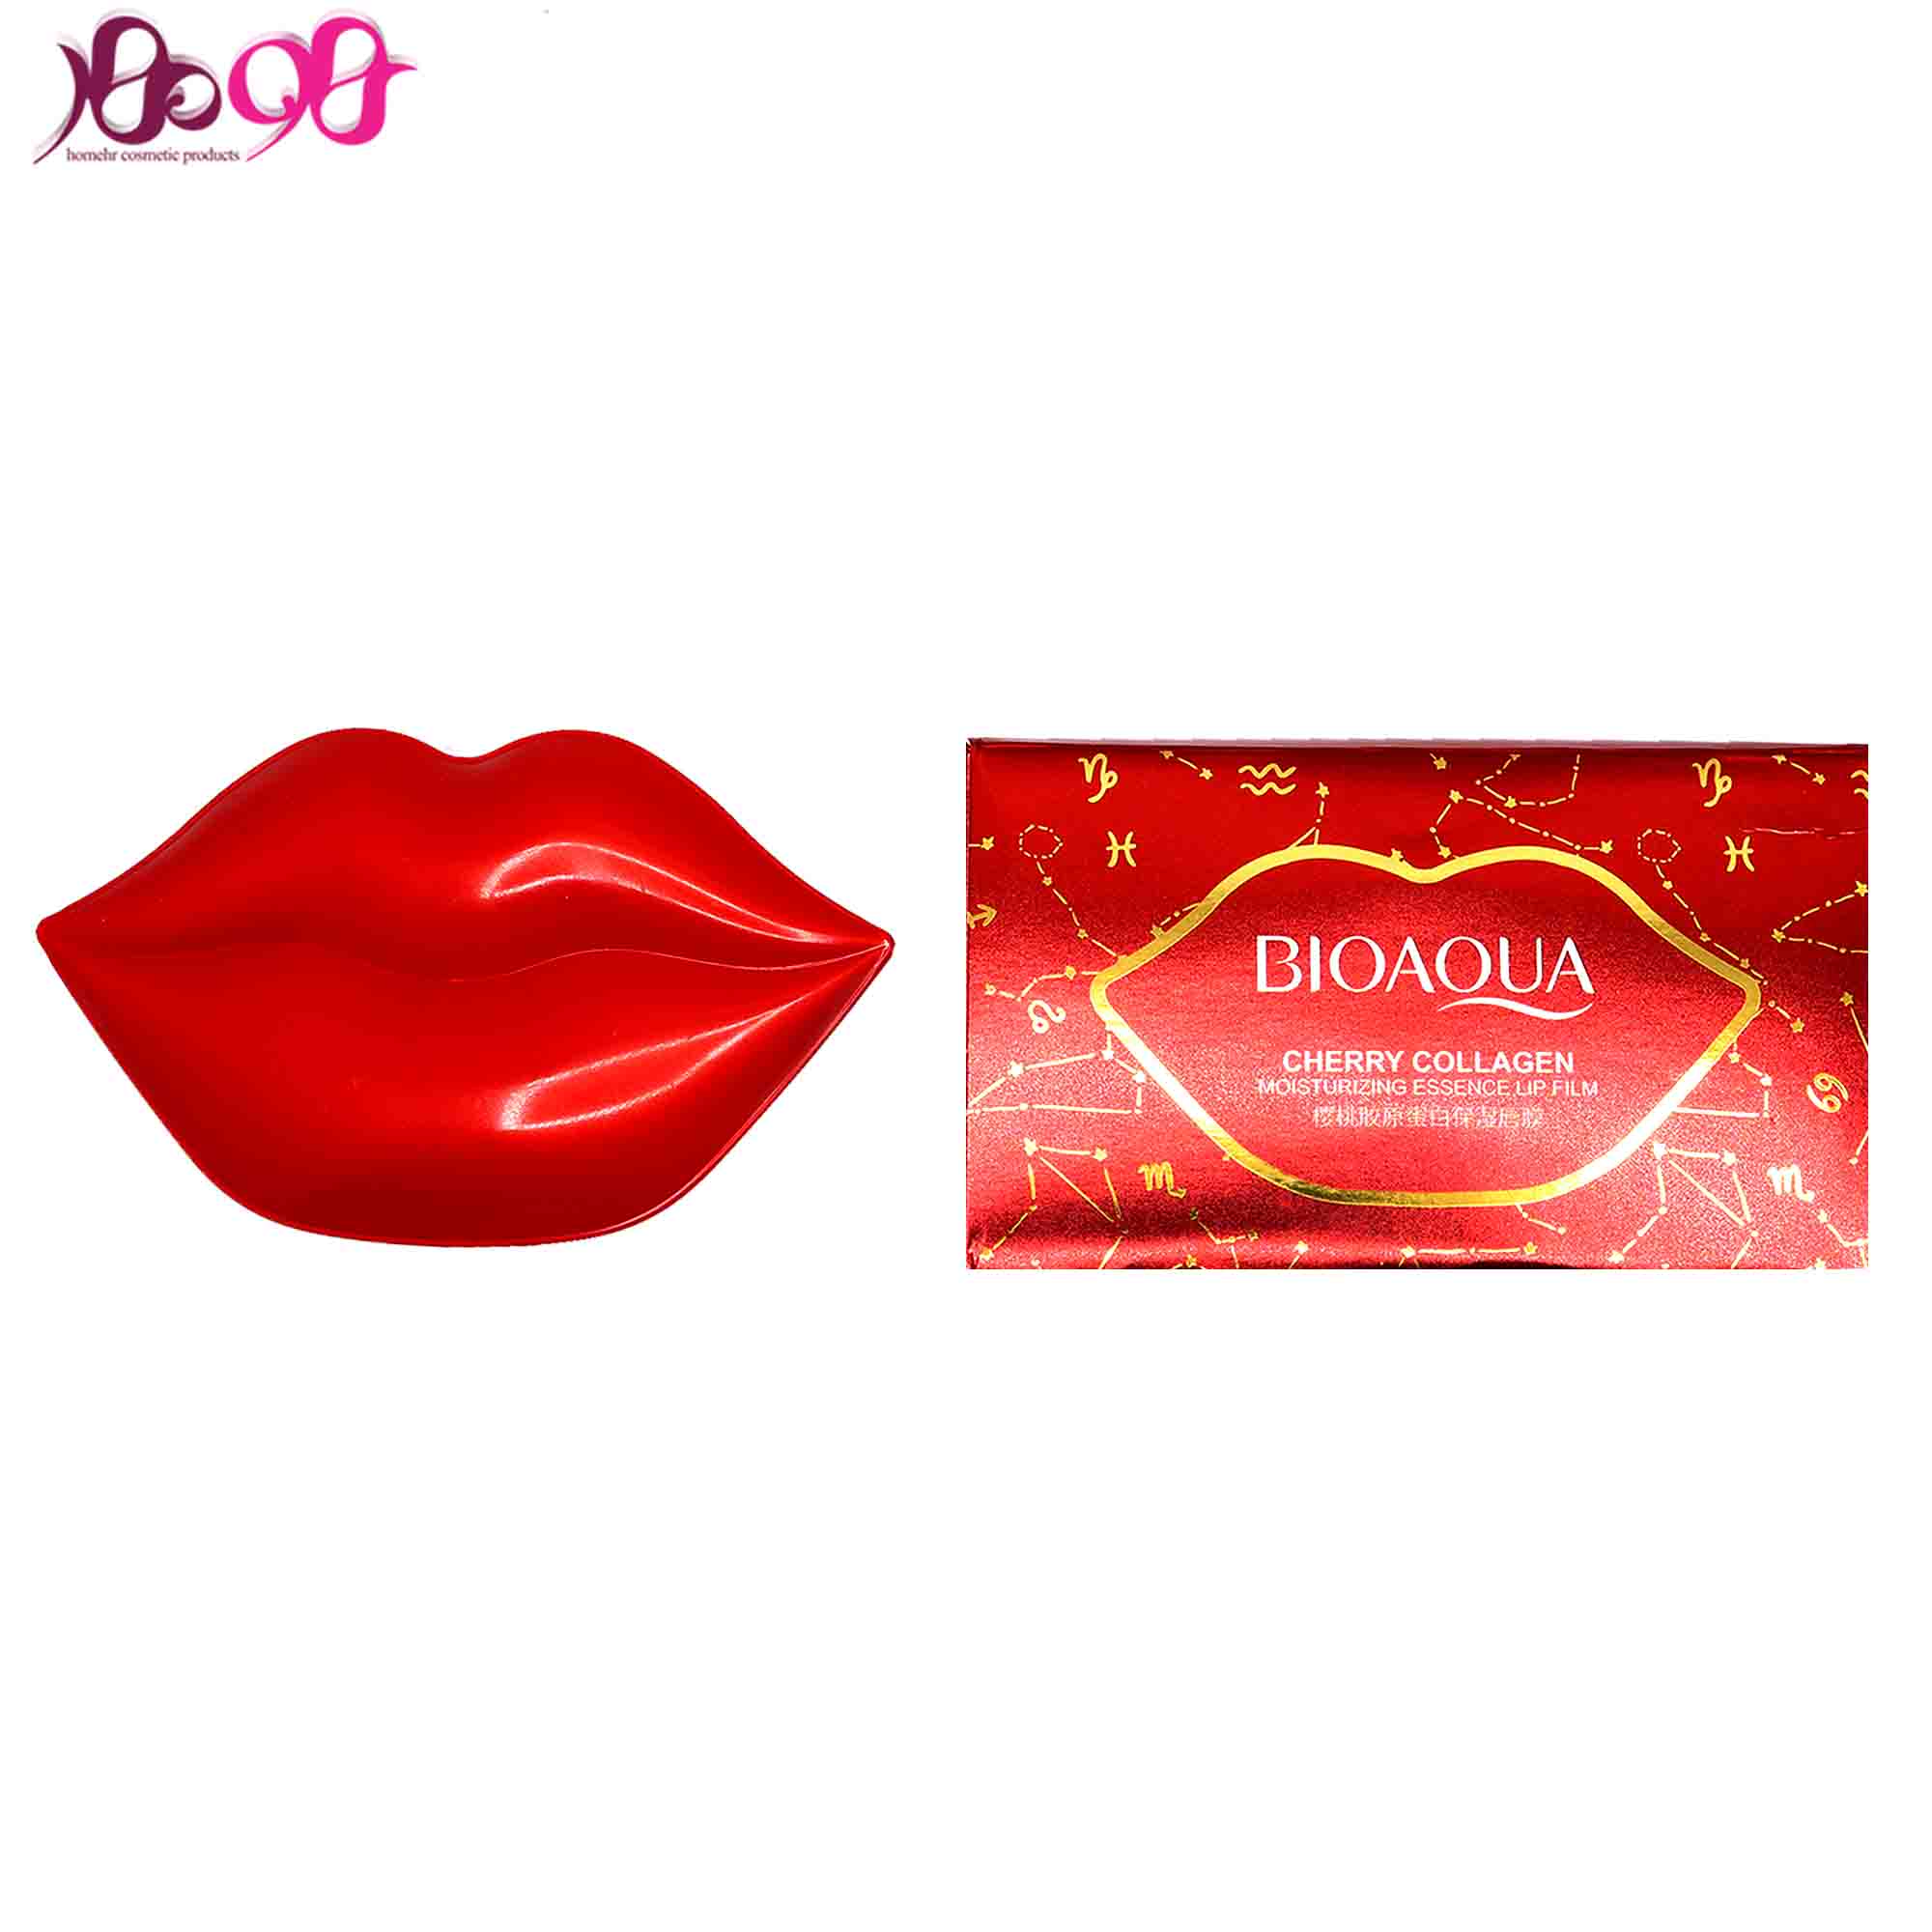 ماسک-لب-مدل-cherry-collagen-بيوآکوا-BIOAOUA